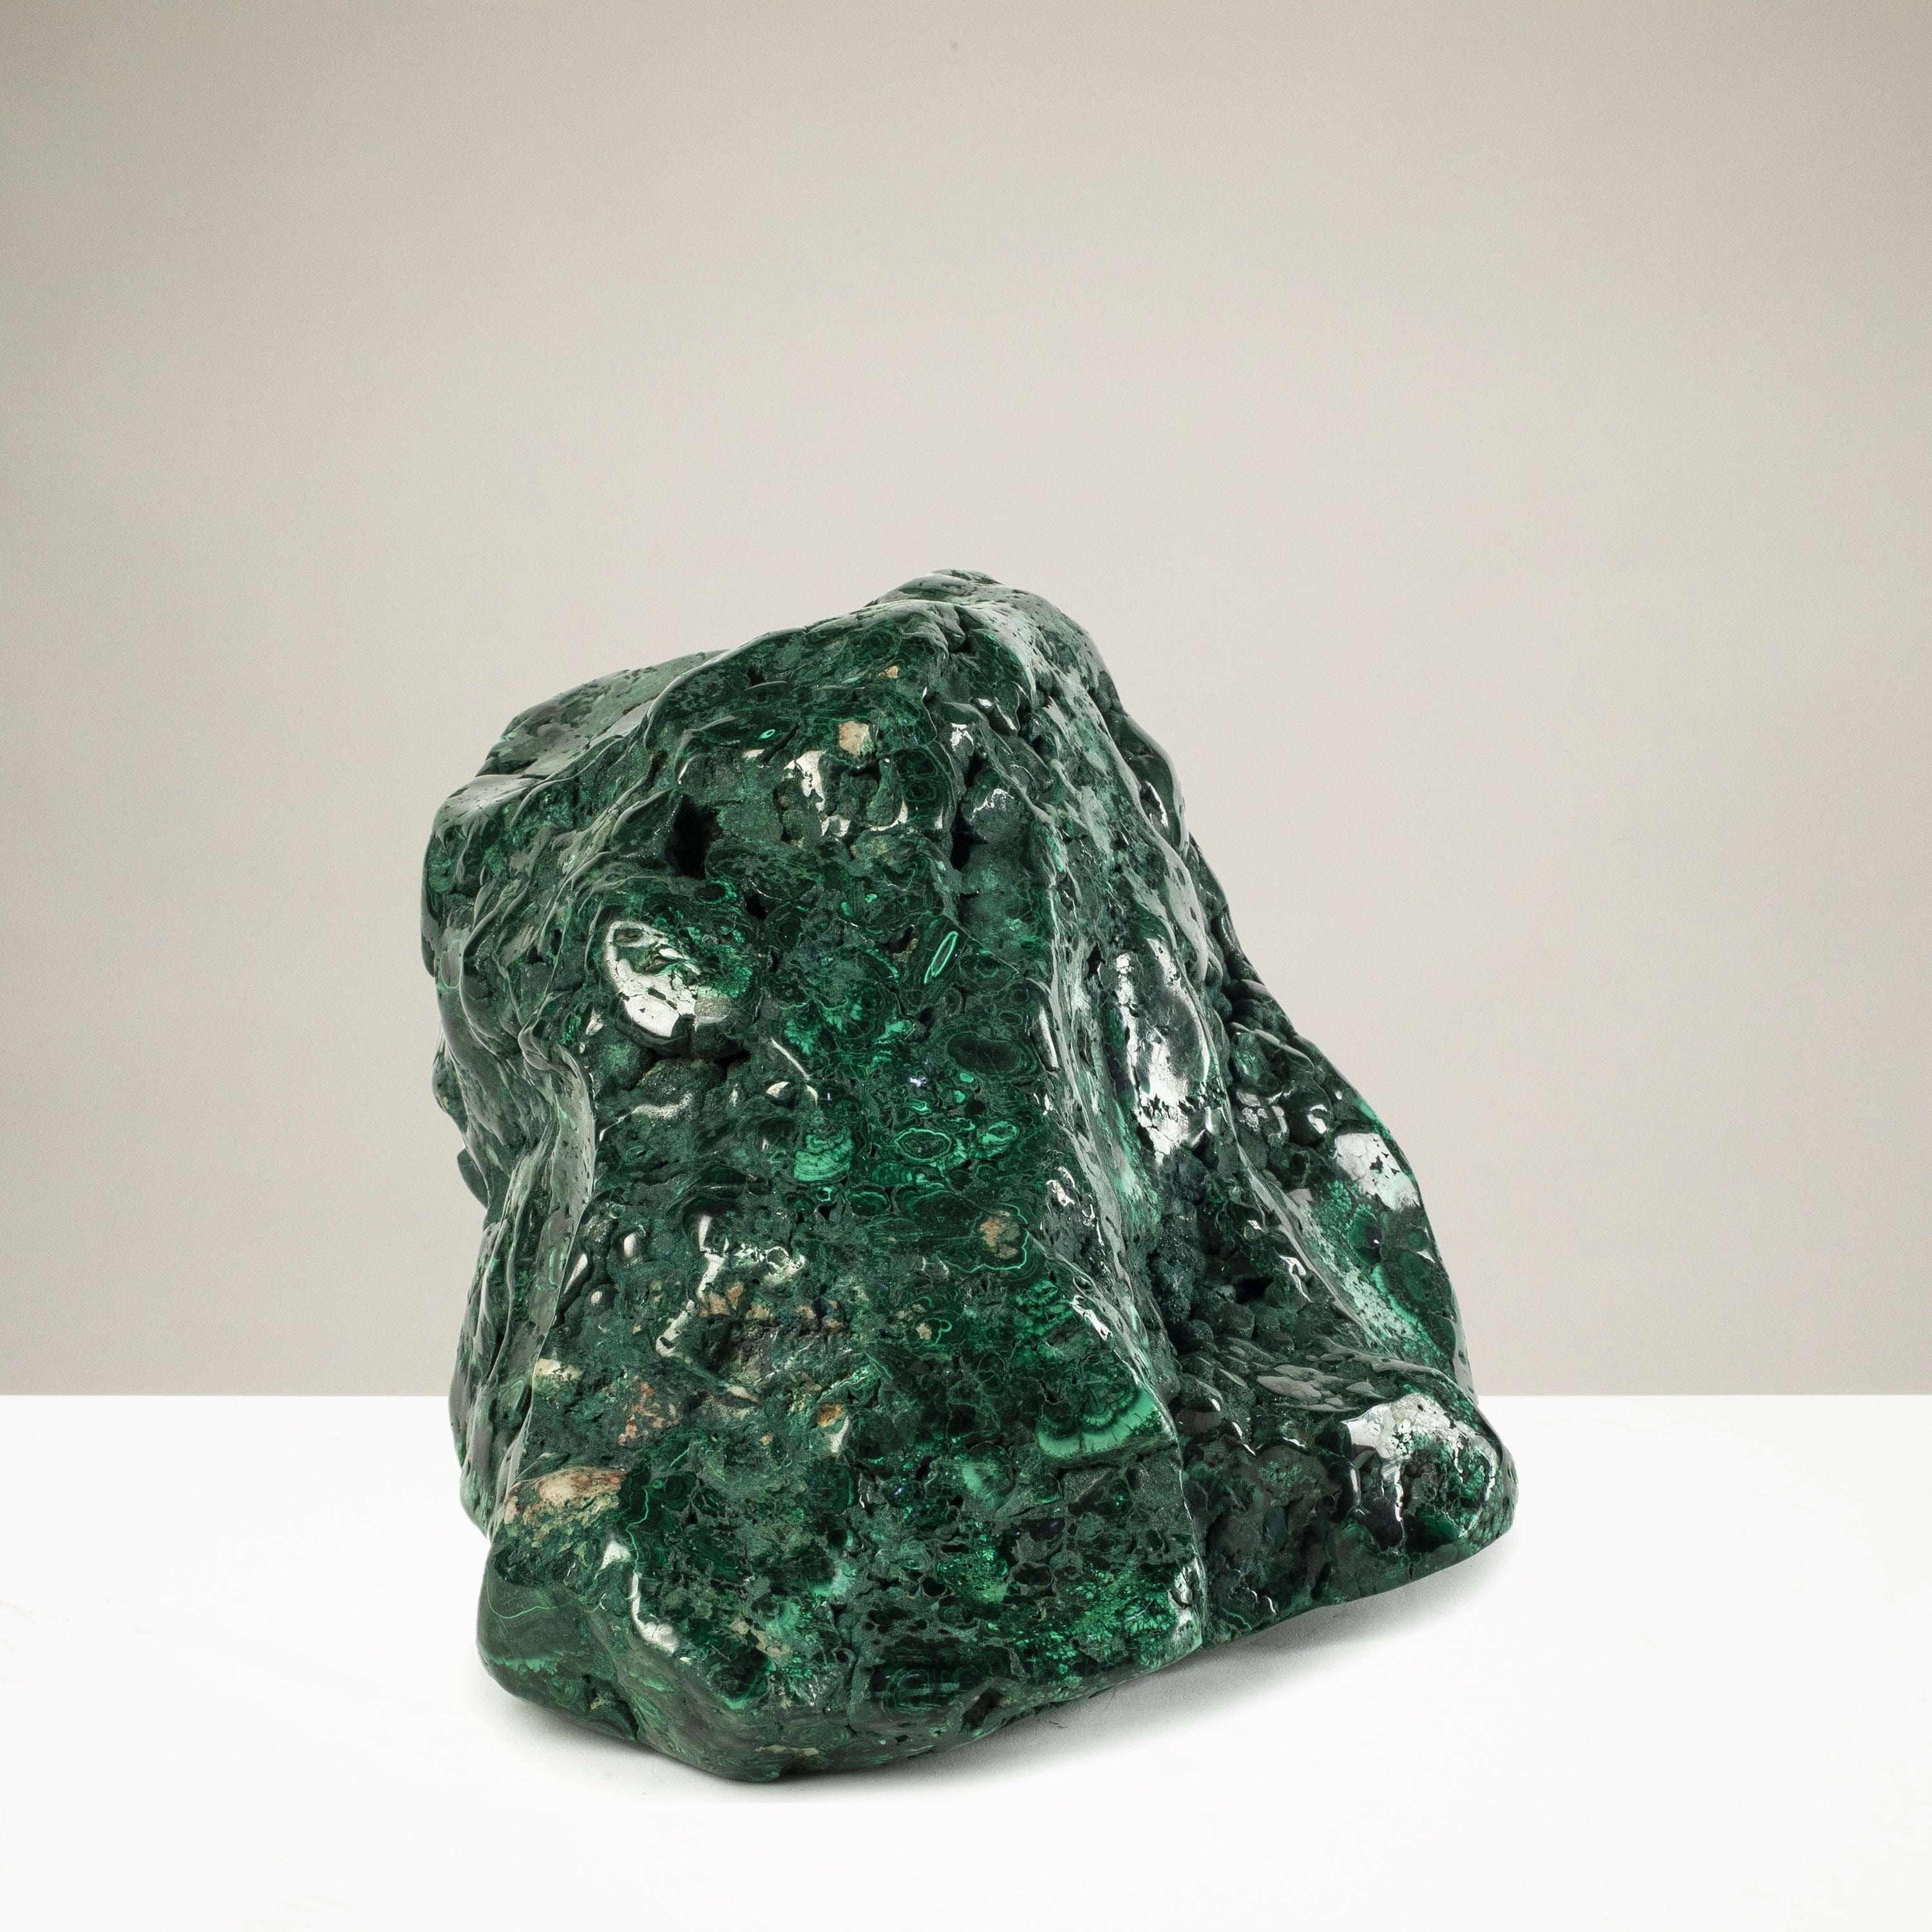 Kalifano Malachite Rare Natural Green Malachite Polished Freeform Specimen from Congo - 15.3 kg / 33.7 lbs MA9700.001